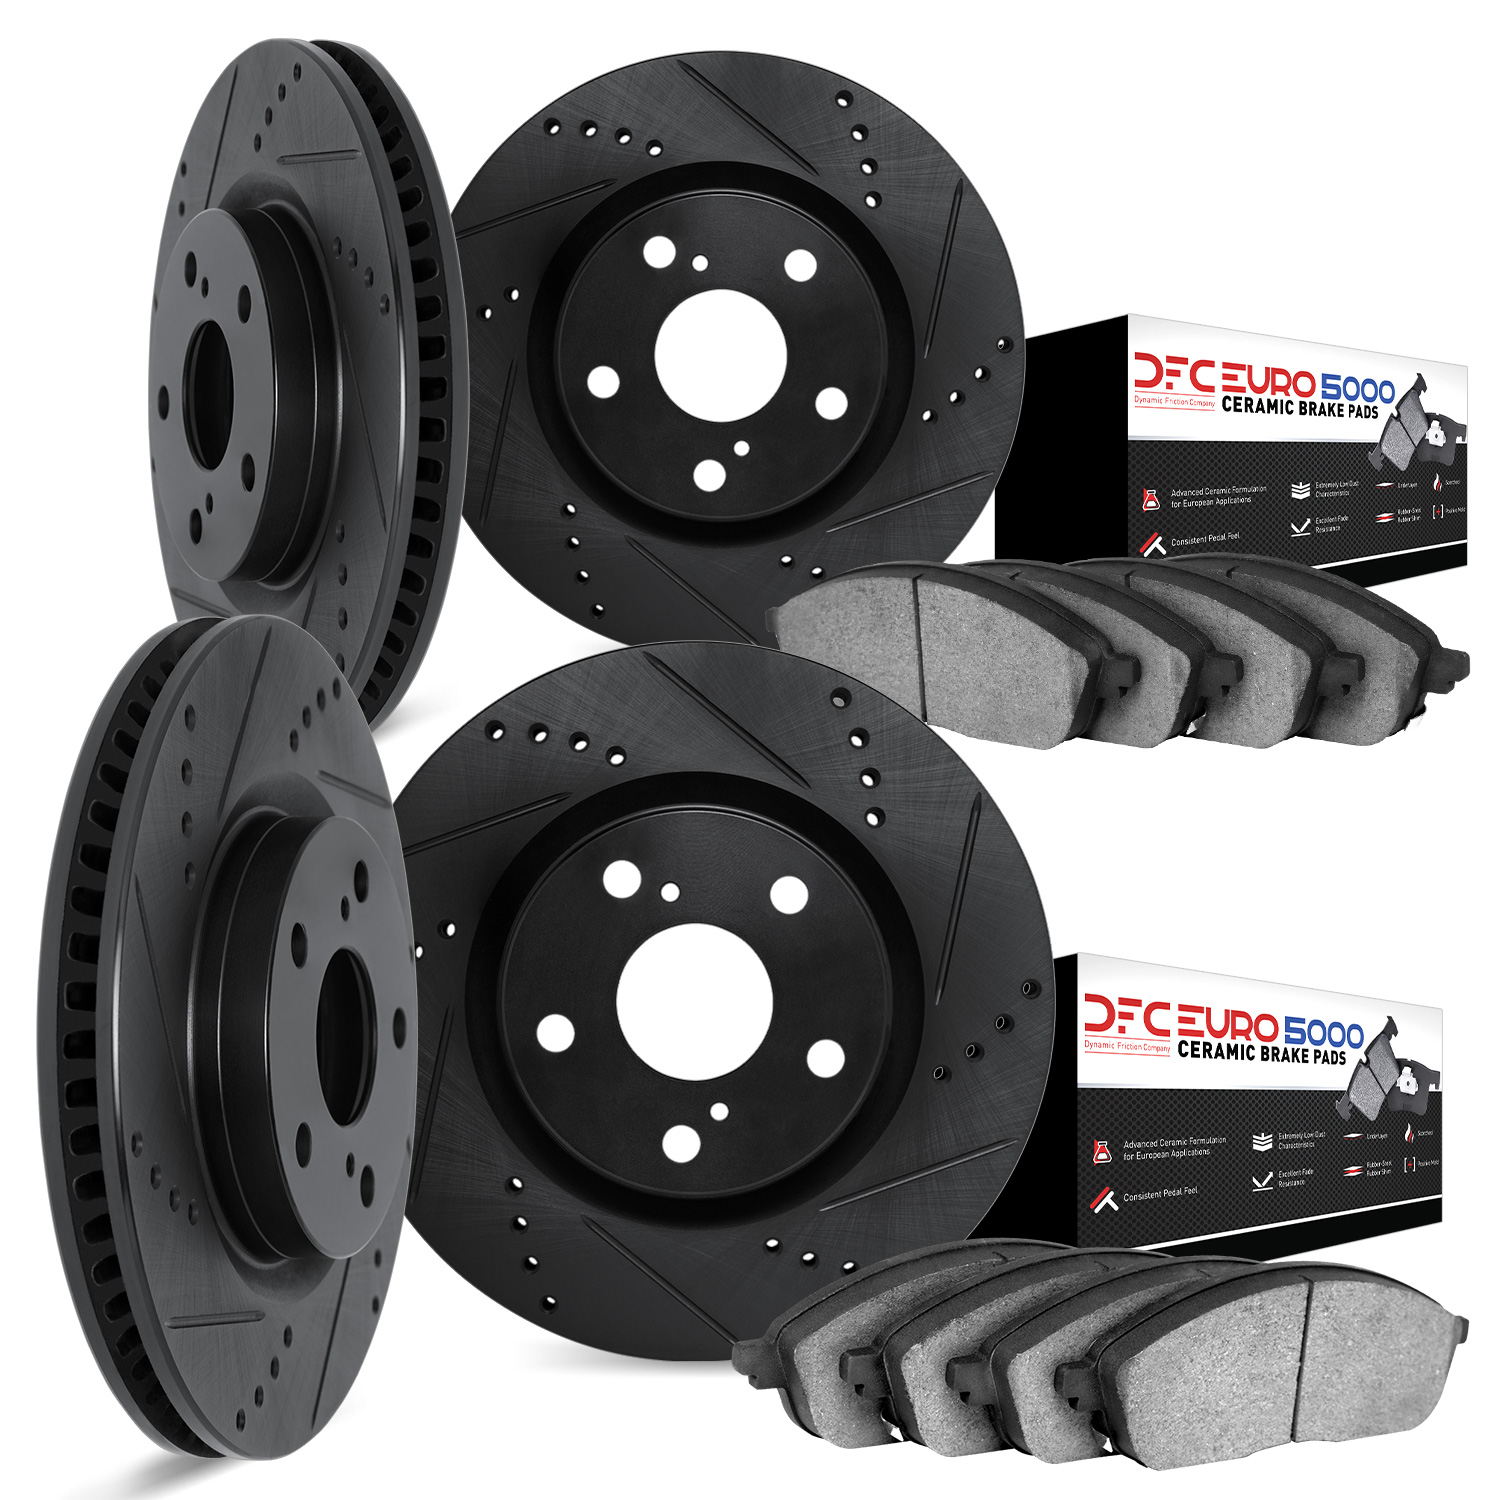 8604-54004 Drilled/Slotted Brake Rotors w/5000 Euro Ceramic Brake Pads Kit [Black], 2005-2014 Ford/Lincoln/Mercury/Mazda, Positi